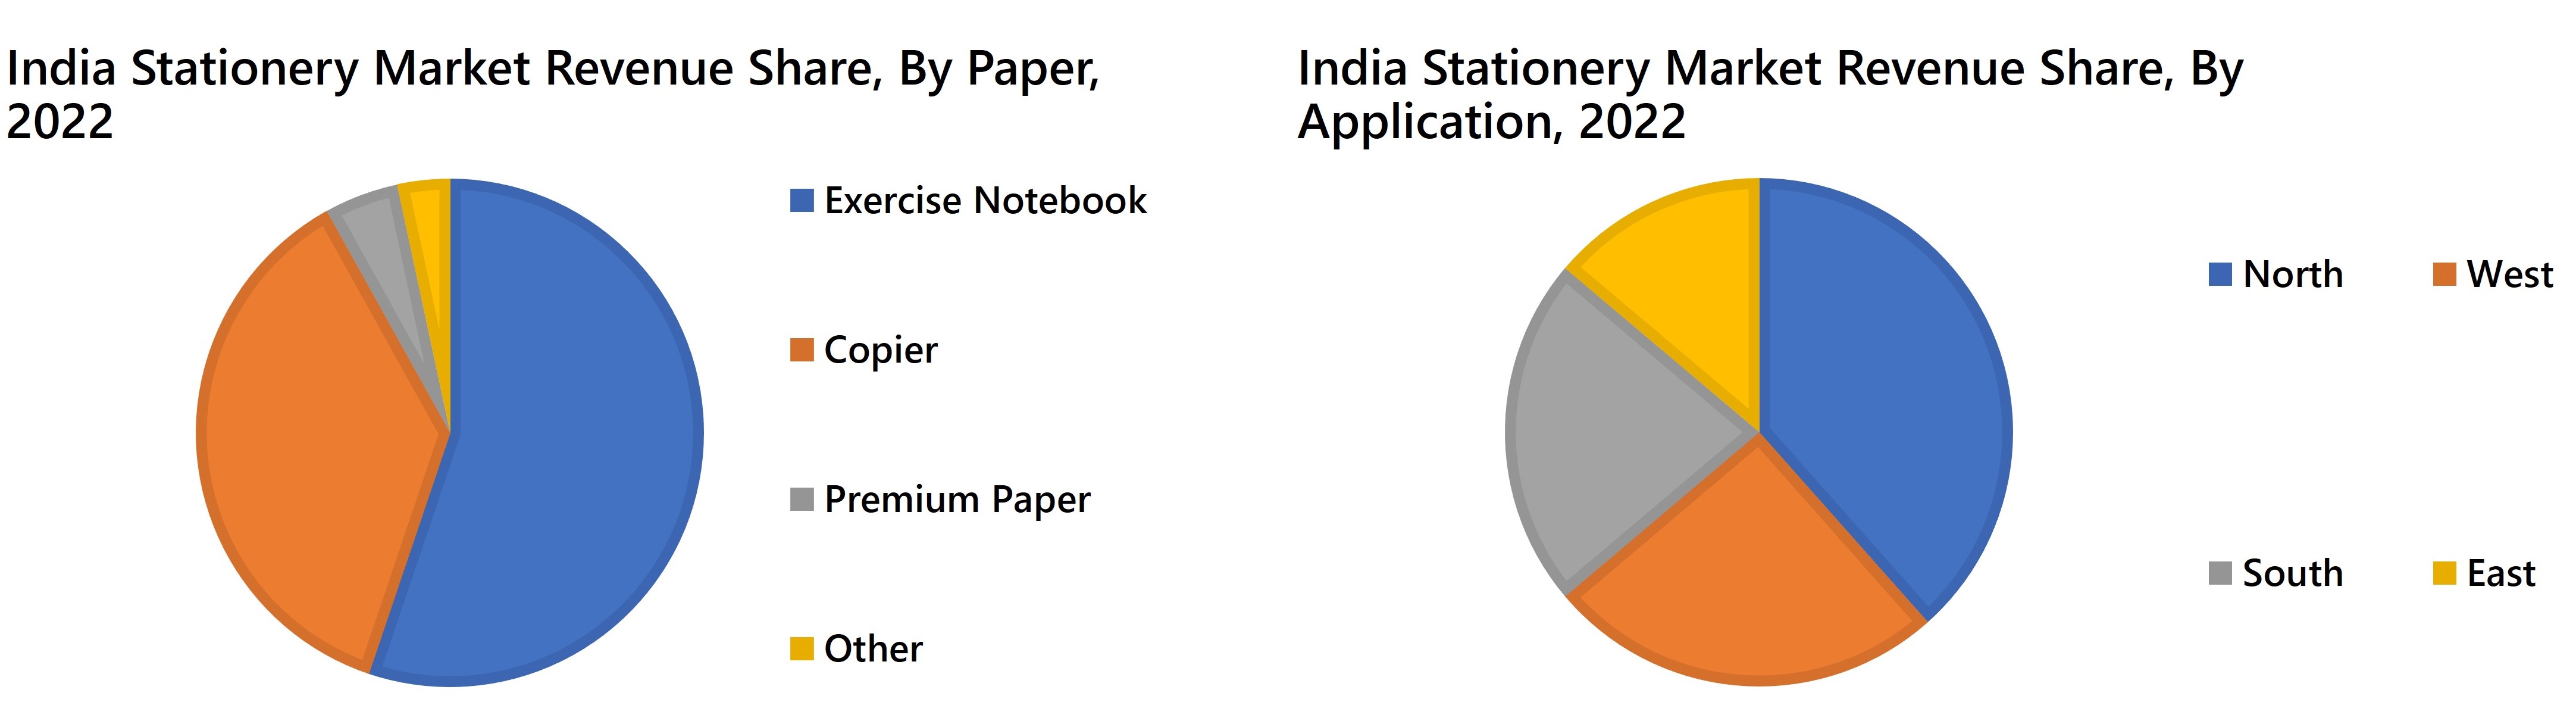 India Stationery Market Revenue Share